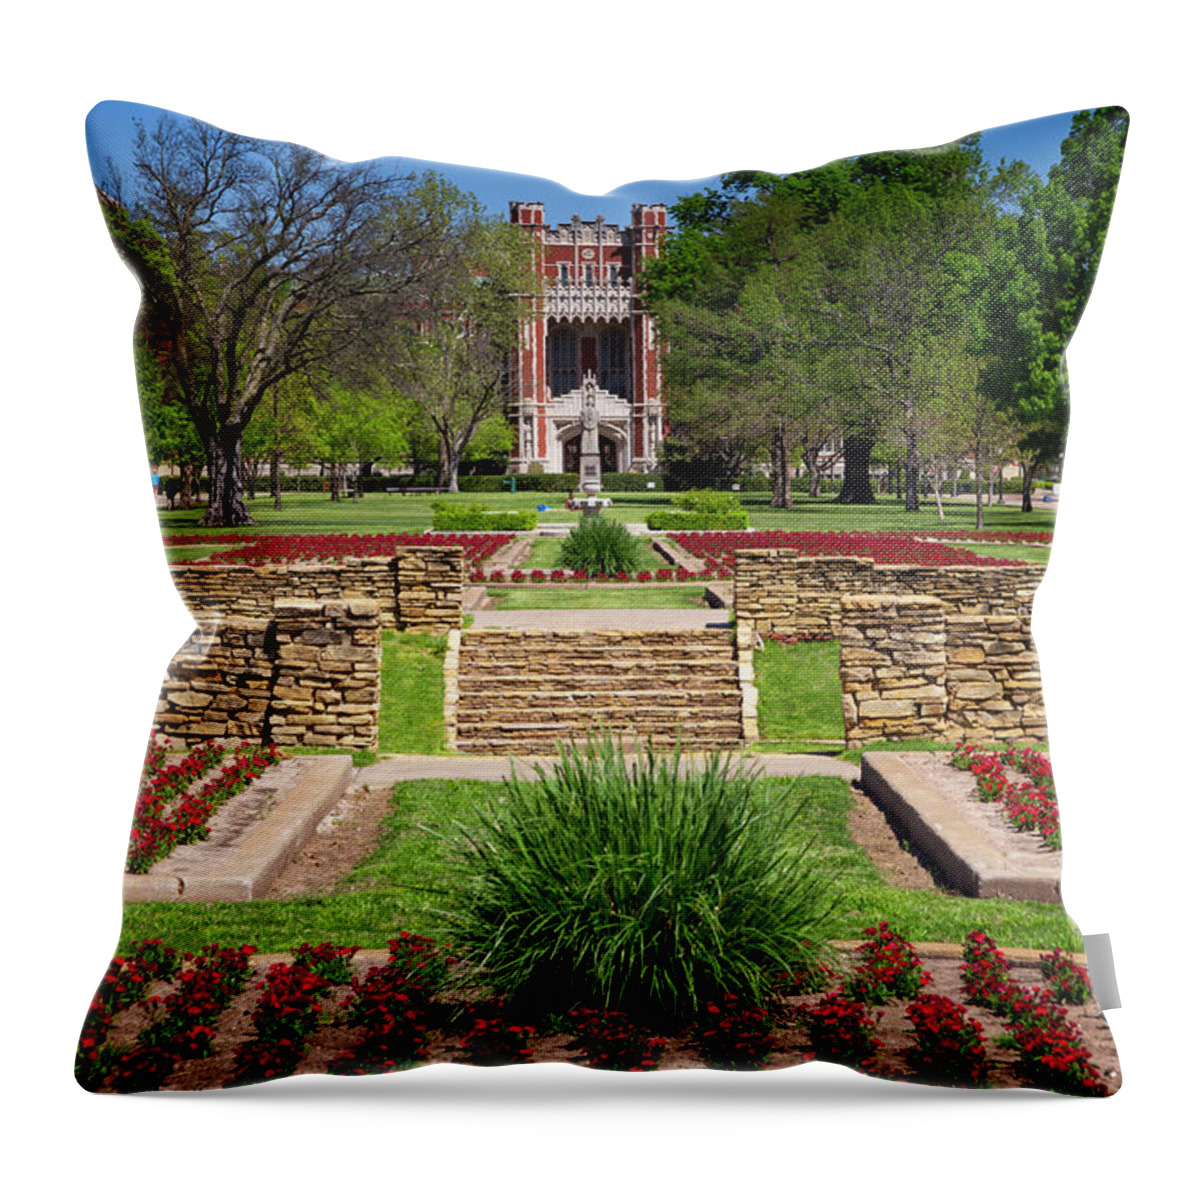 Oklahoma Throw Pillow featuring the photograph Oklahoma University Campus 7 by Ricky Barnard